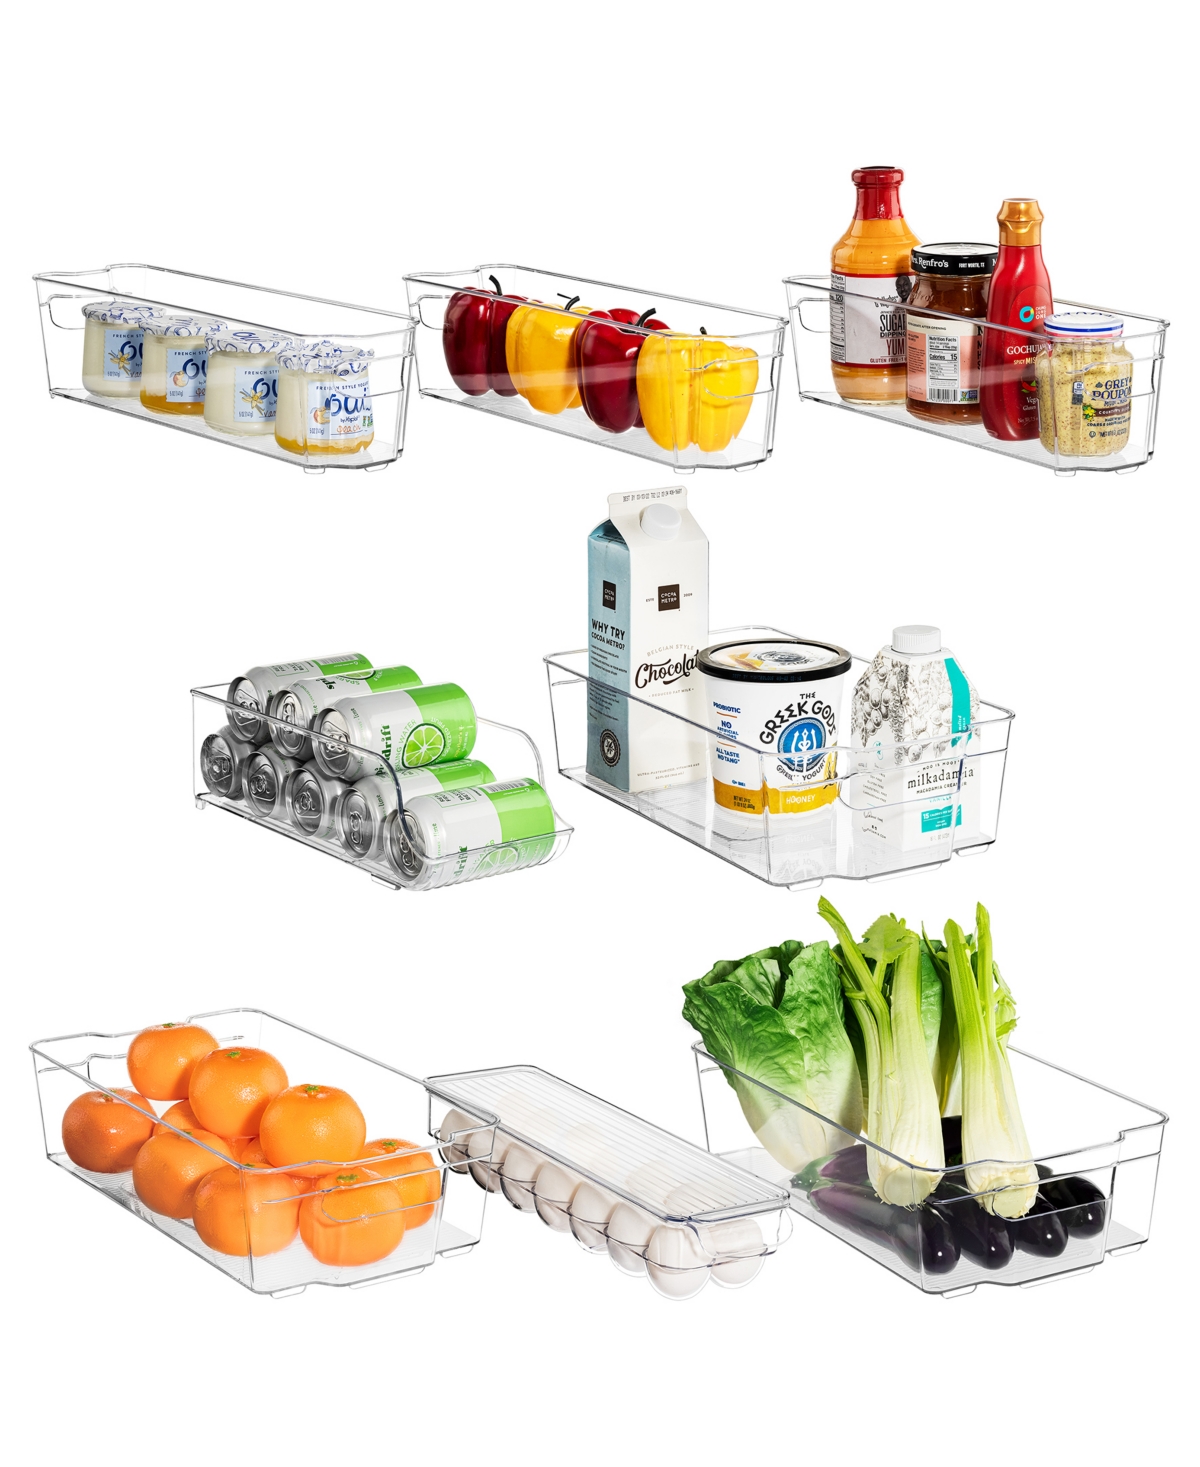 Plastic Refrigerator Freezer and Fridge Bins Organizer Set, Pack of 8 - Clear